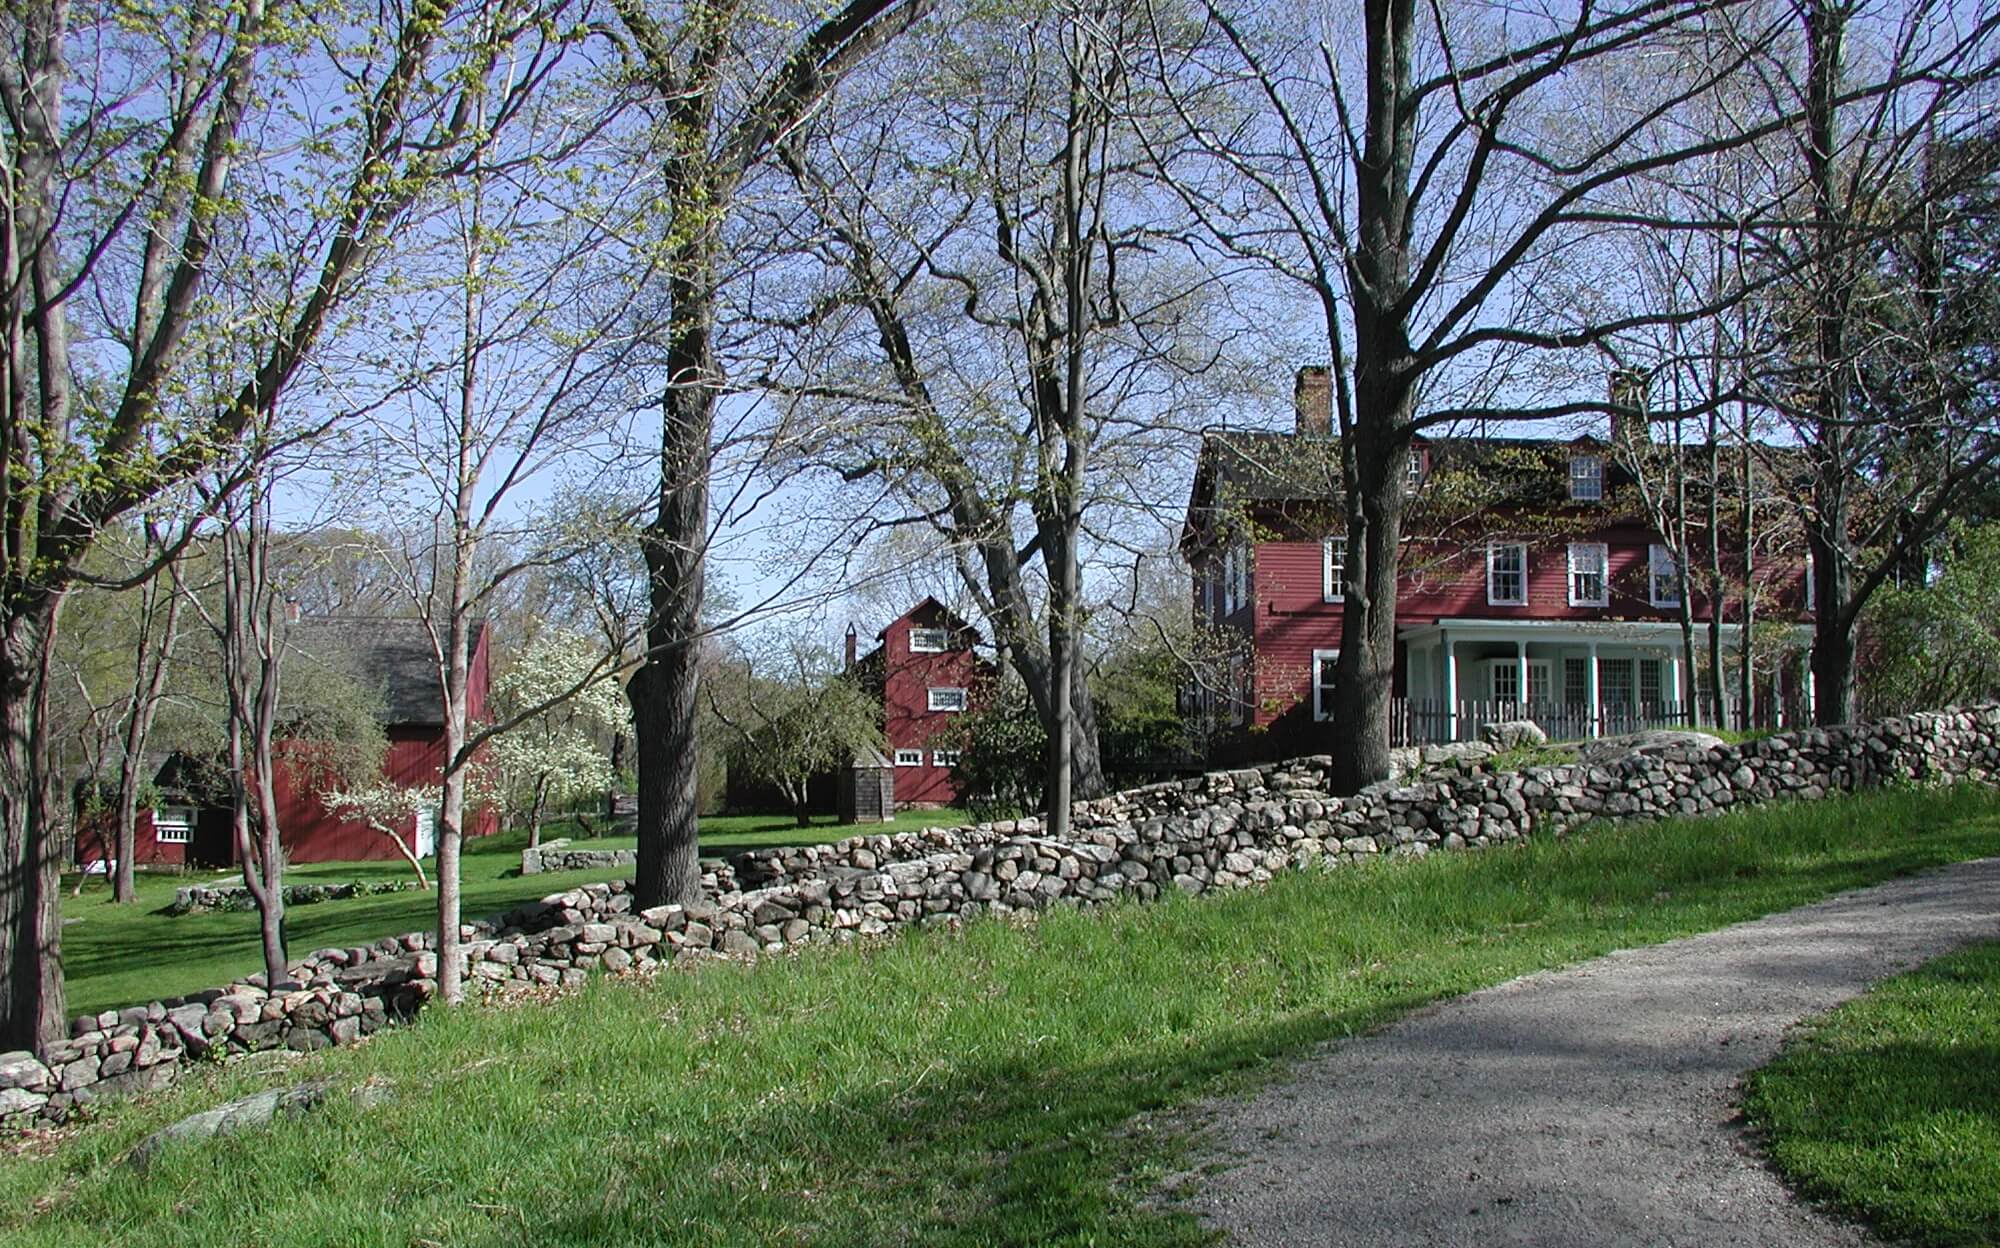 Weir Farm National Historic Site and Art Center